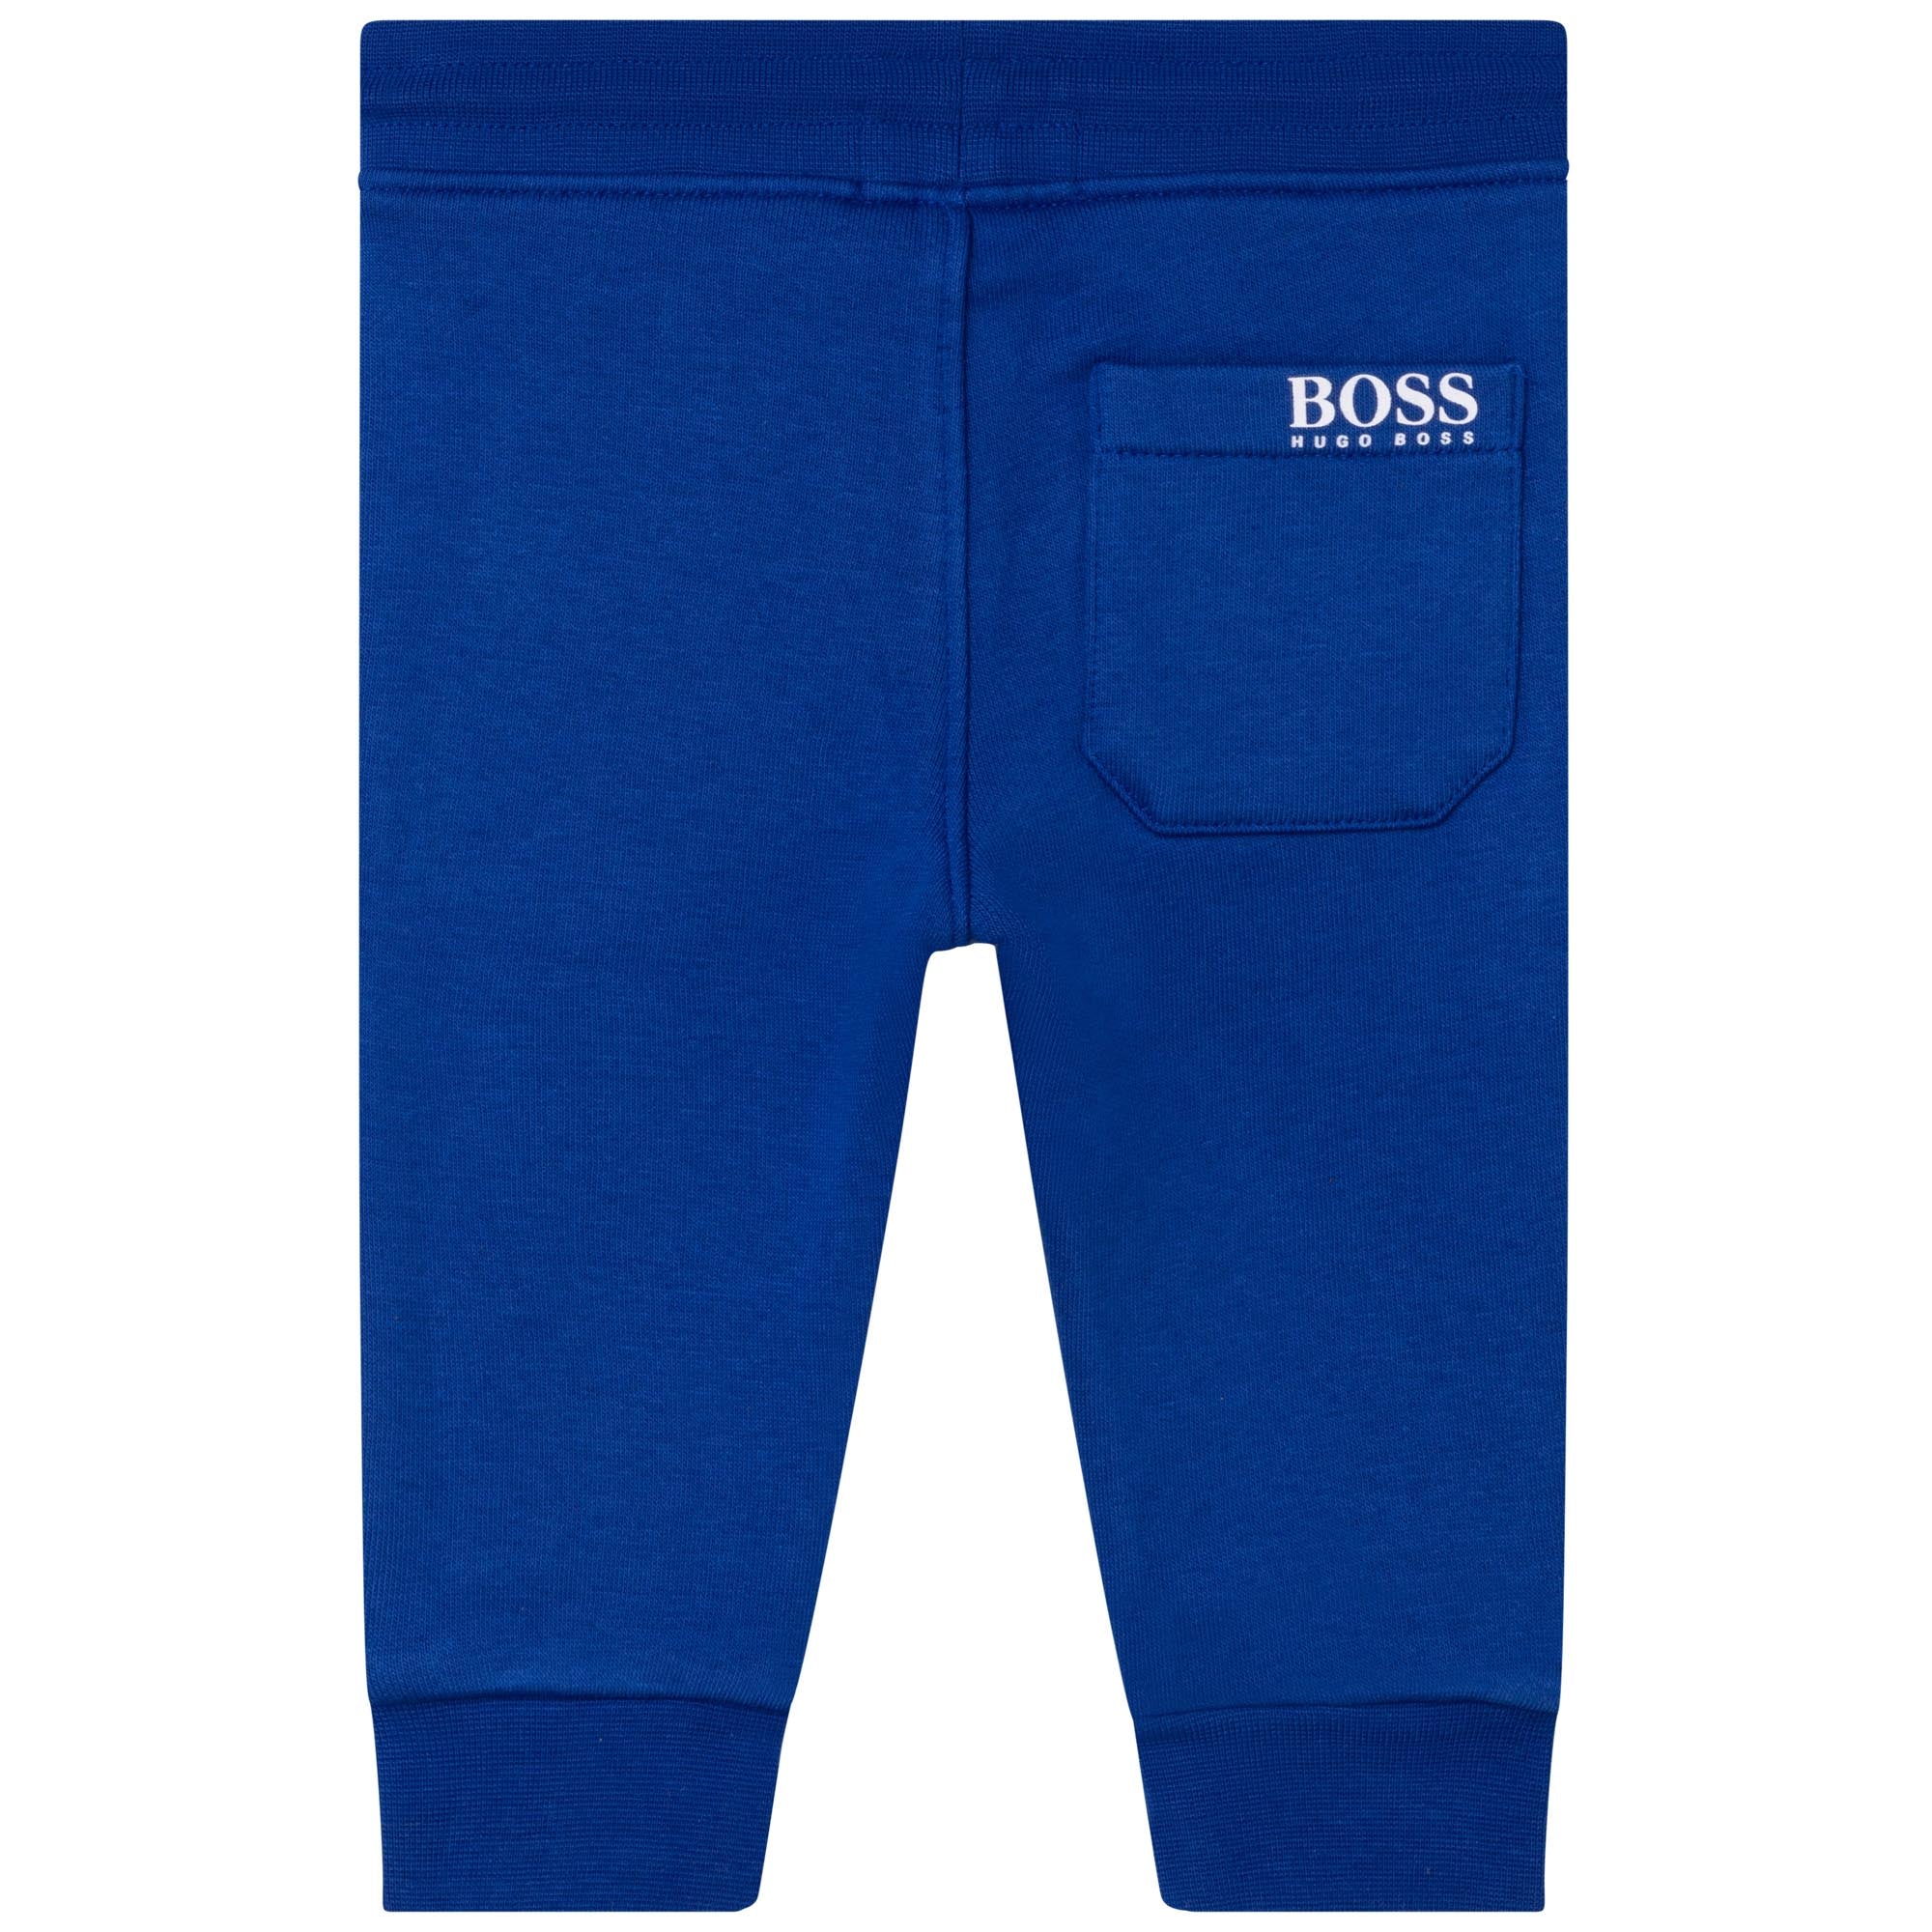 Boss Jogging Bottoms - J04411